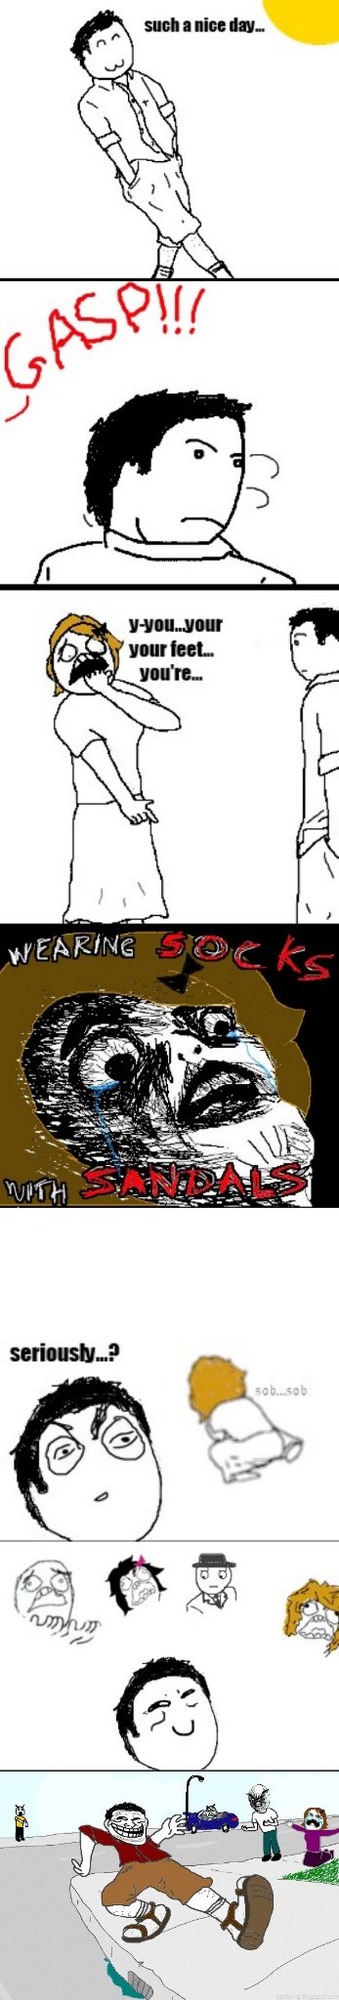 socks with sandals - meme